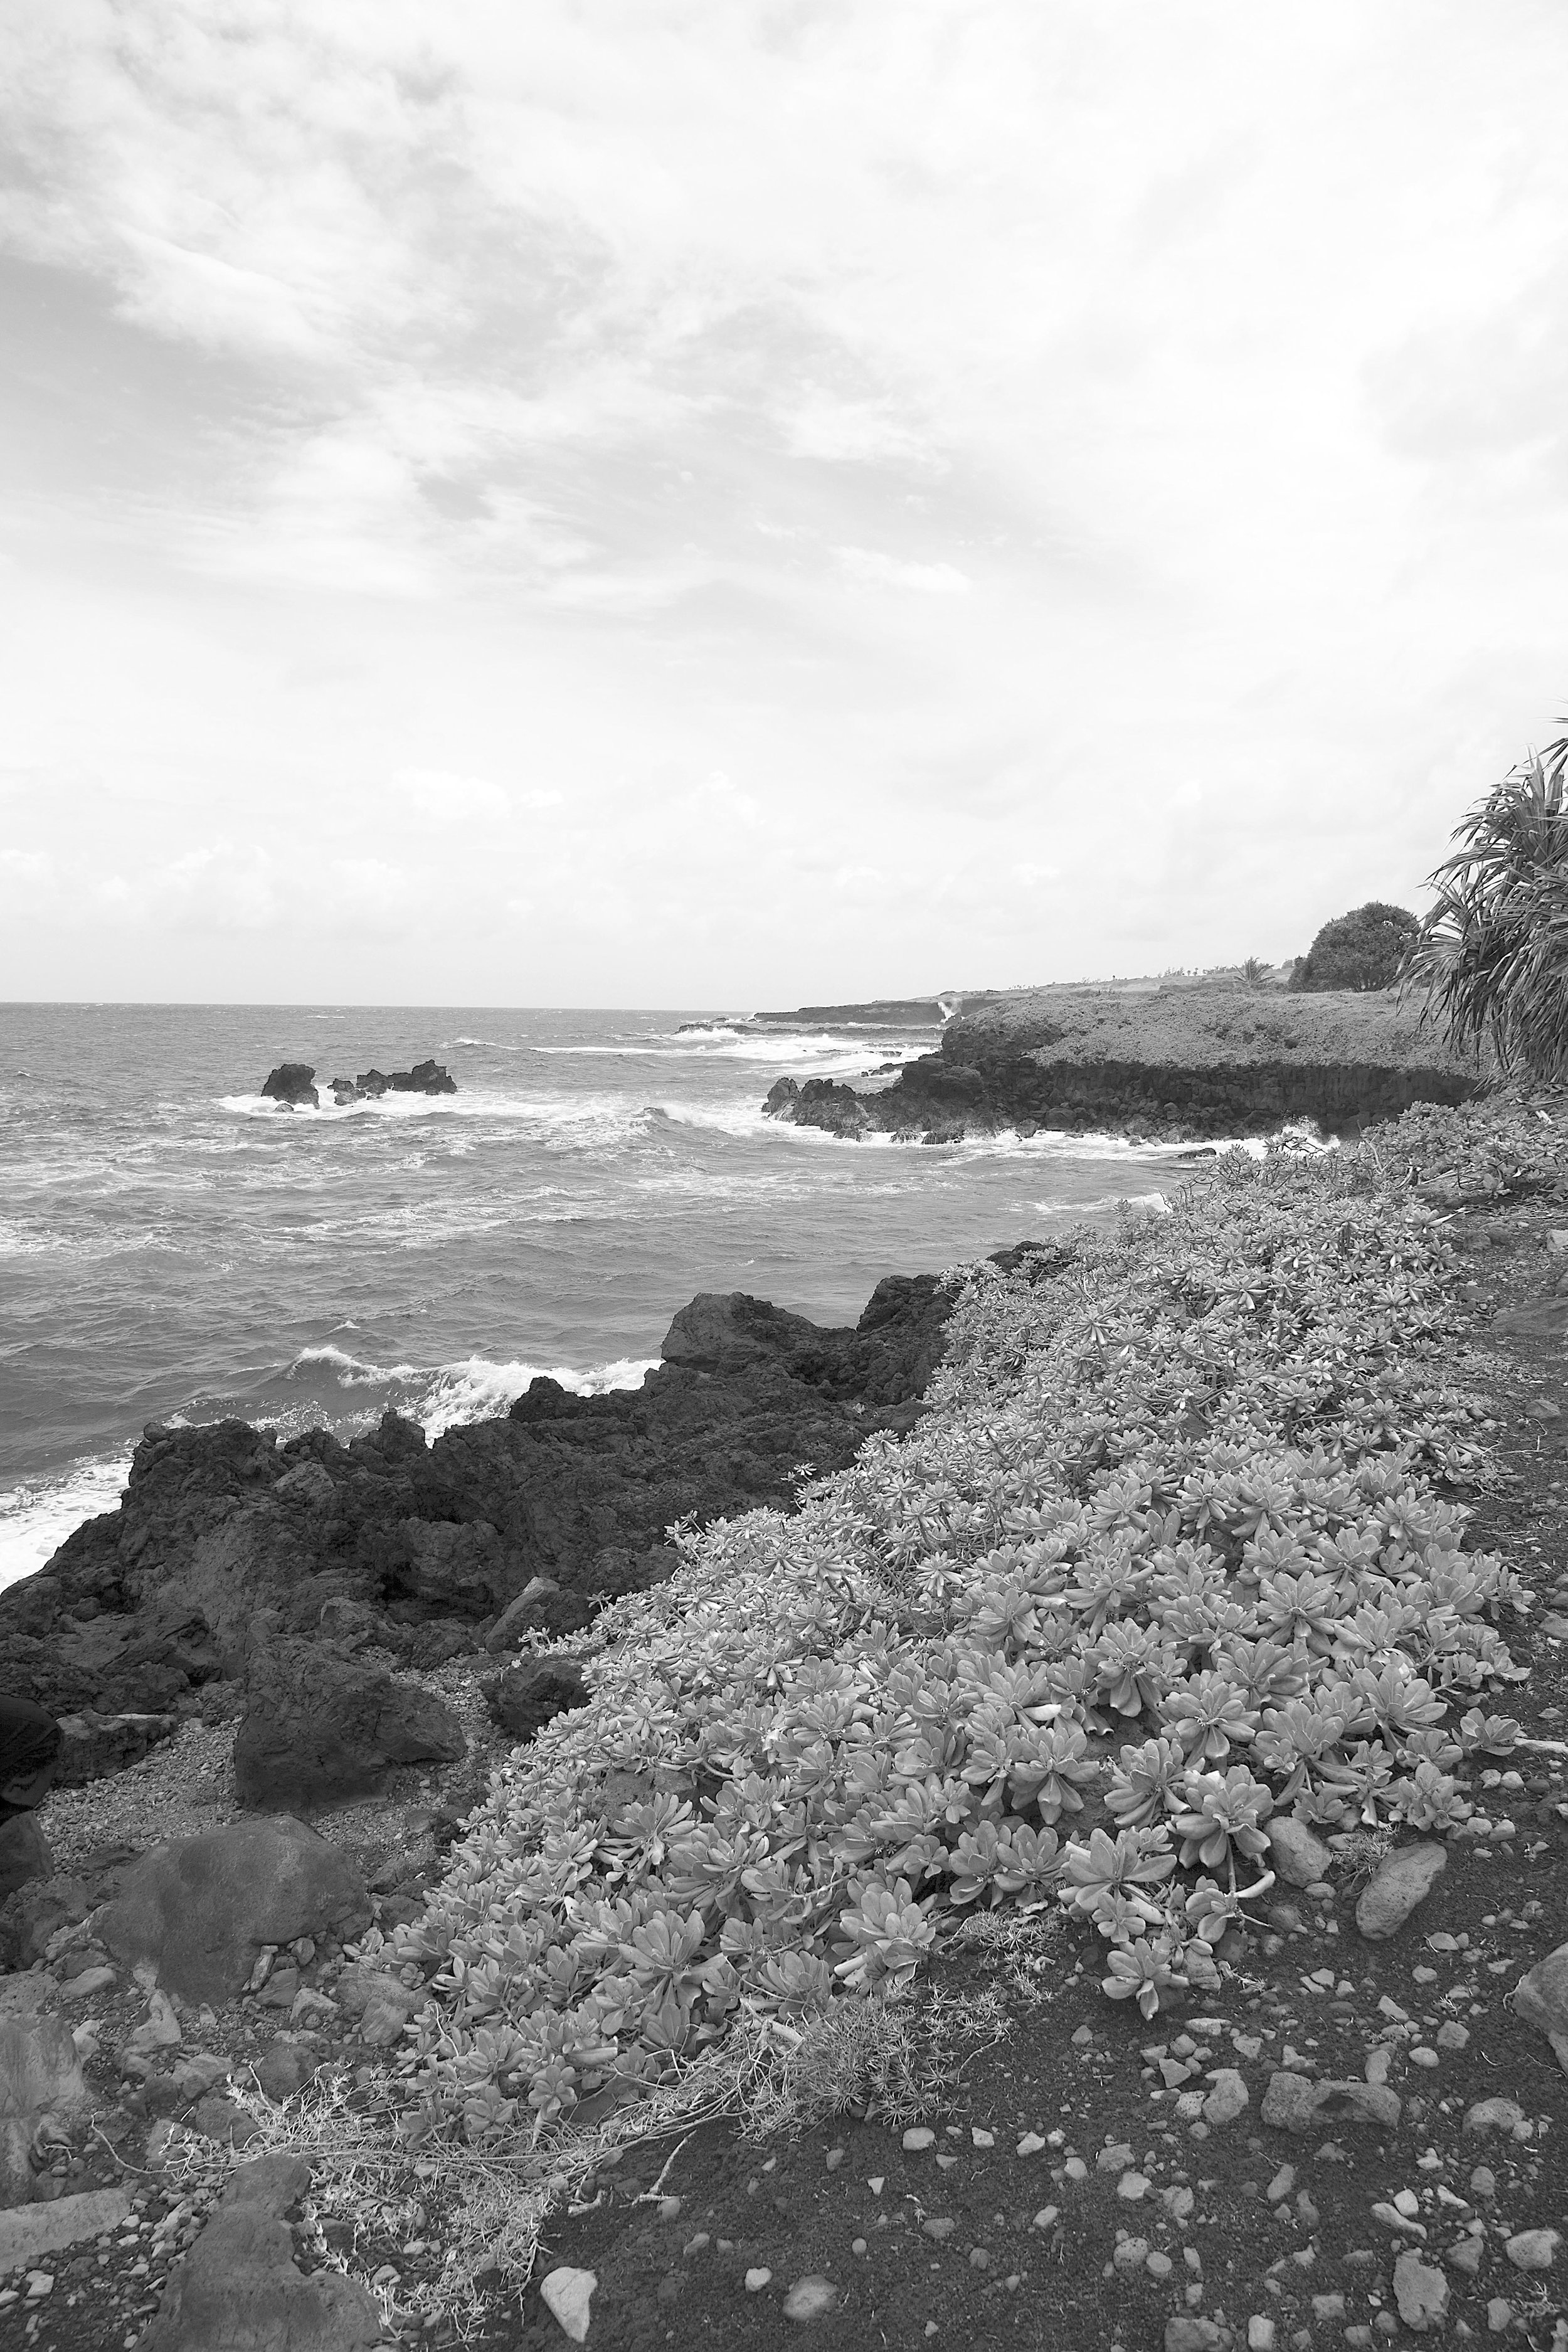 Maui Sea 1 25Apr17.jpg